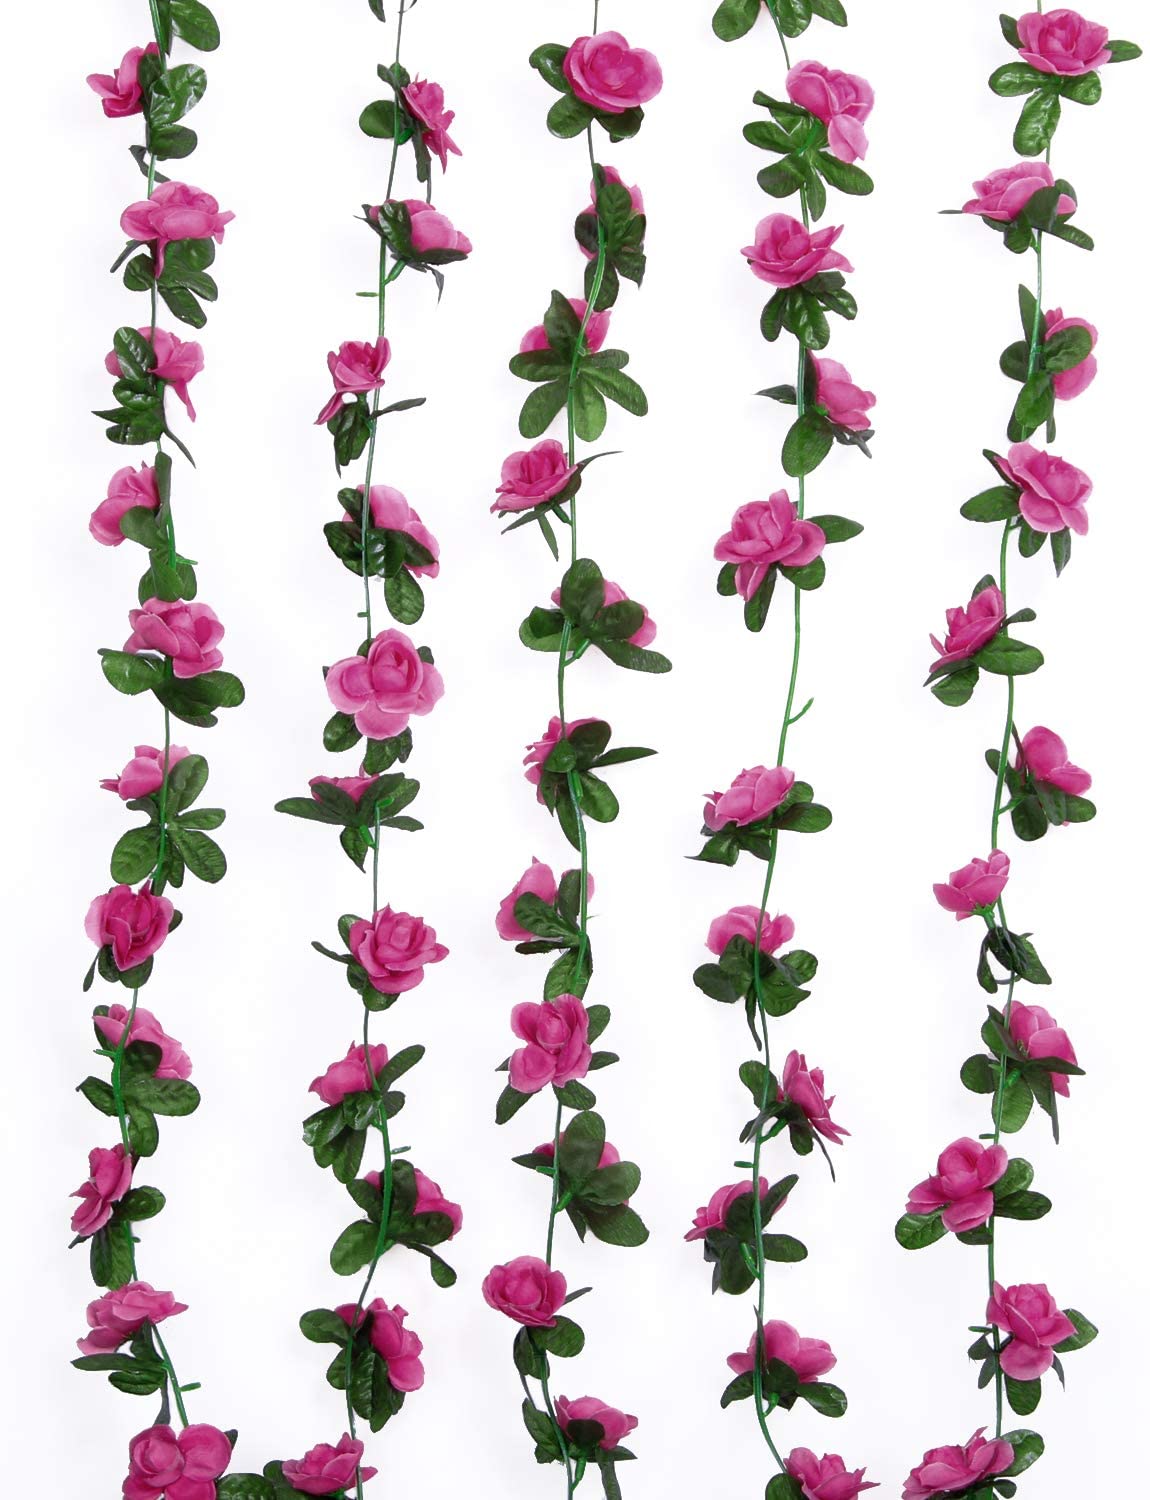 5 Pack 41 FT Fake Rose Vine Flowers Plants Artificial Flower